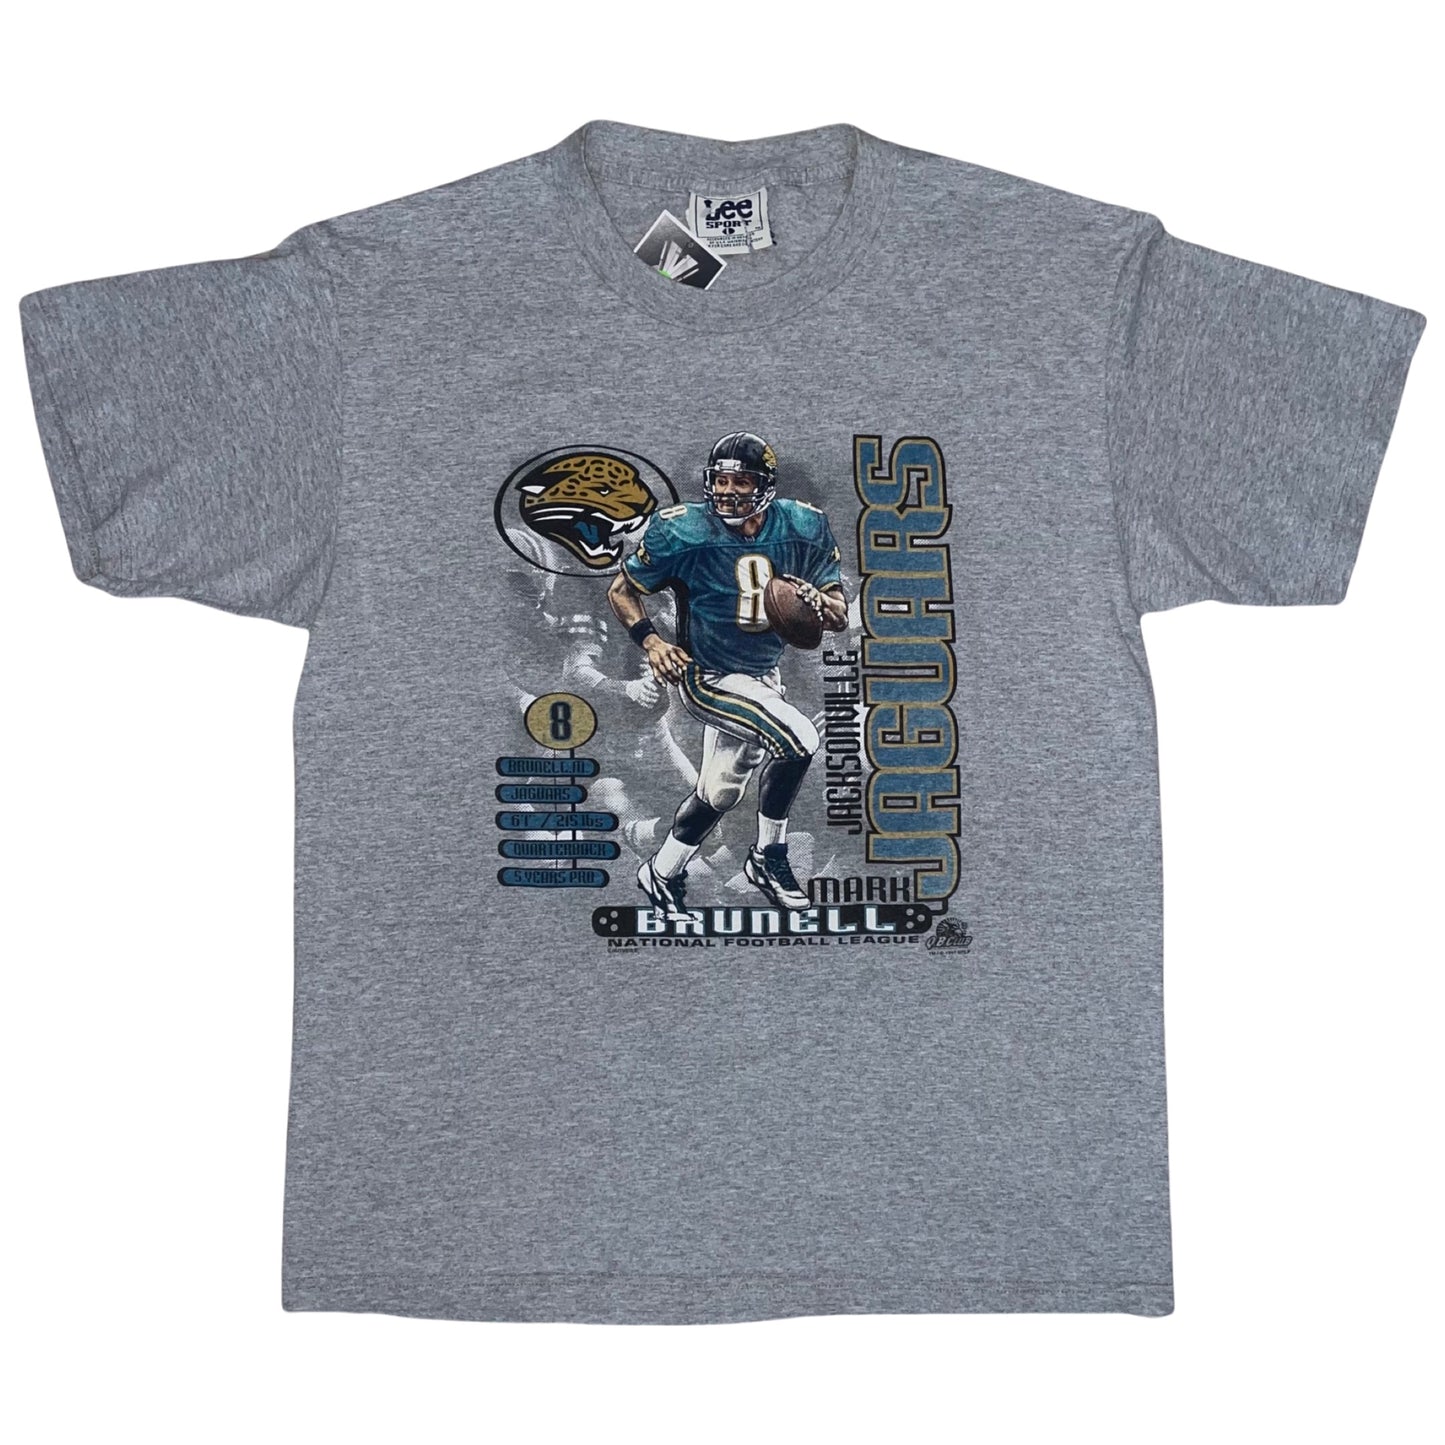 Jacksonville Jaguars TWO-SIDED Mark Brunell shirt size LARGE